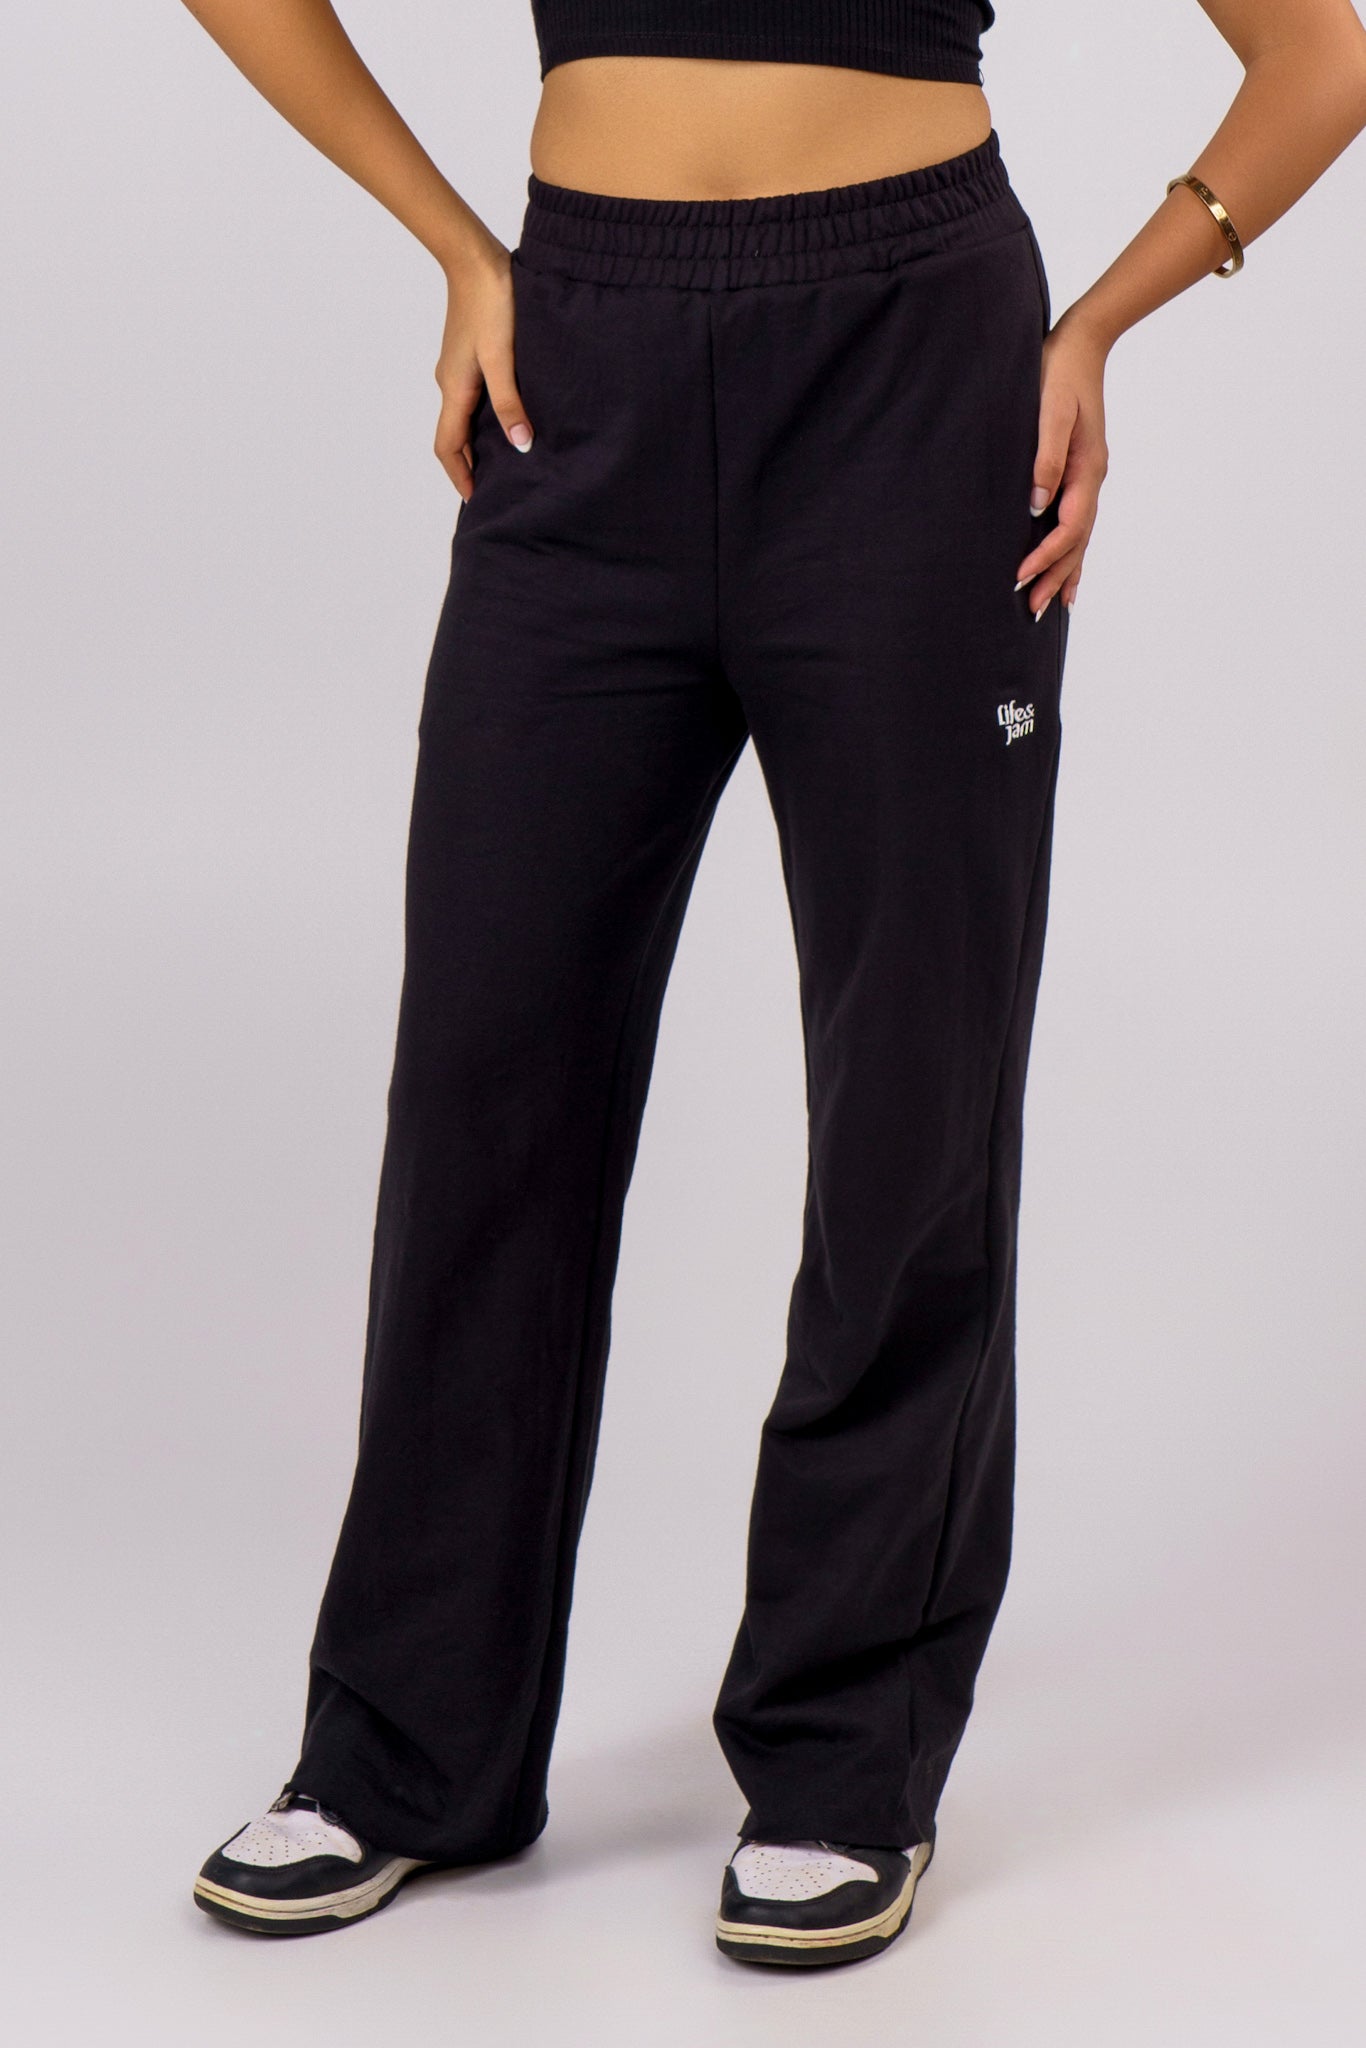 Pajama Pants for Women Cotton Lounge Pant 2 Packs – Genuwiii